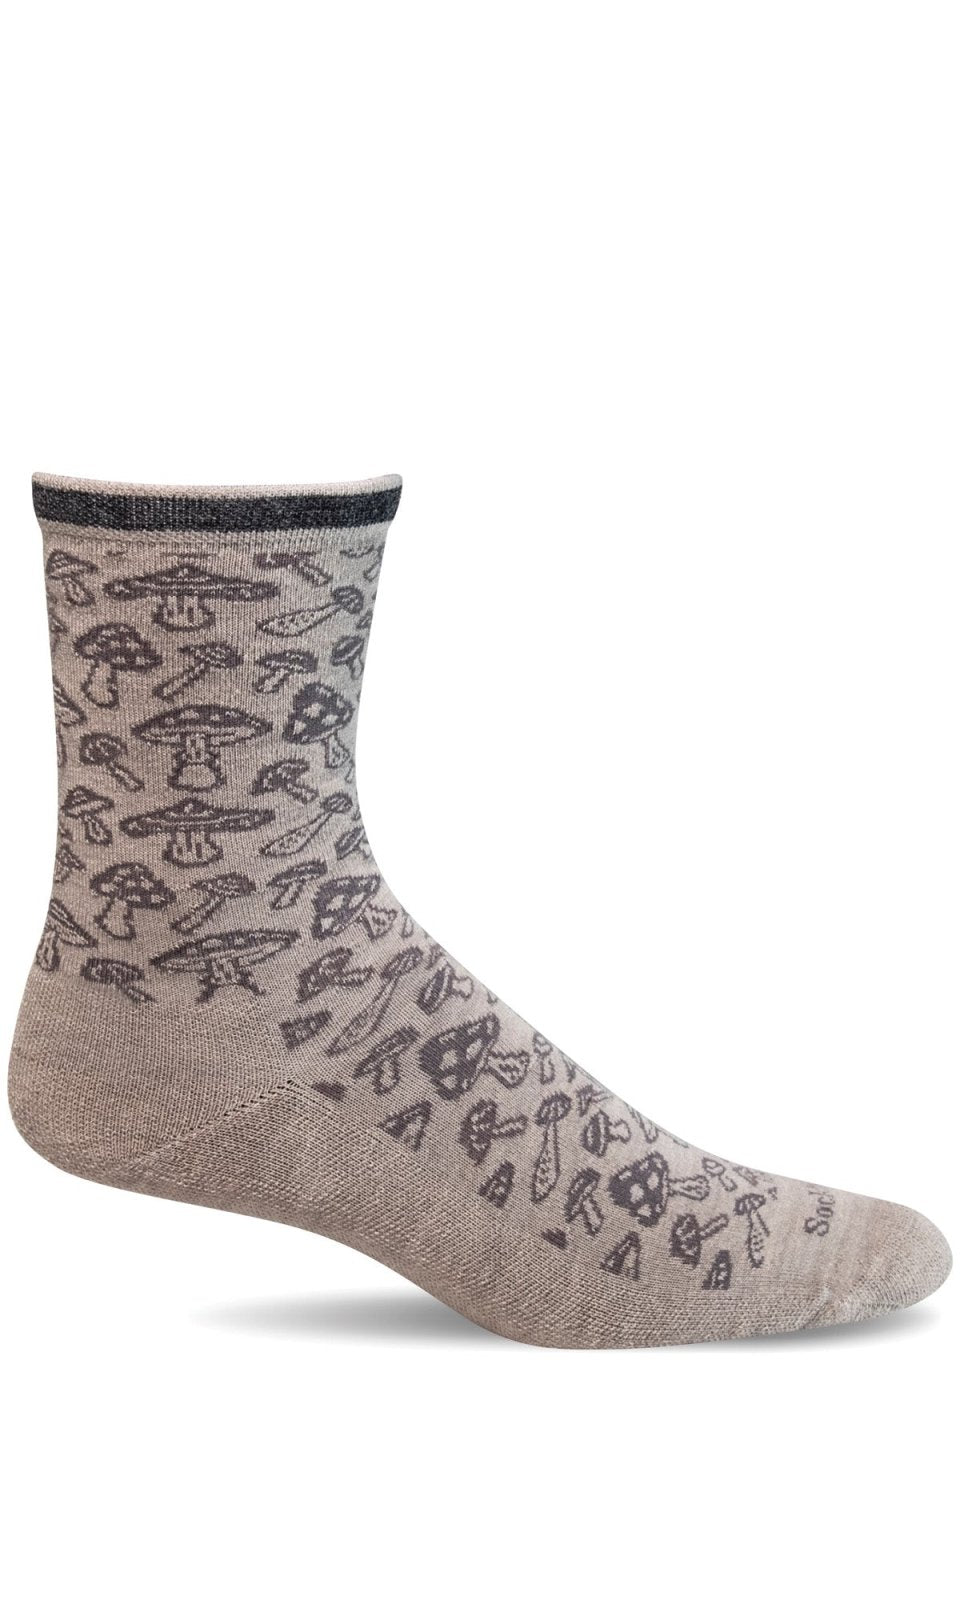 Women's Fantasy Fungi | Essential Comfort Socks - Merino Wool Essential Comfort - Sockwell